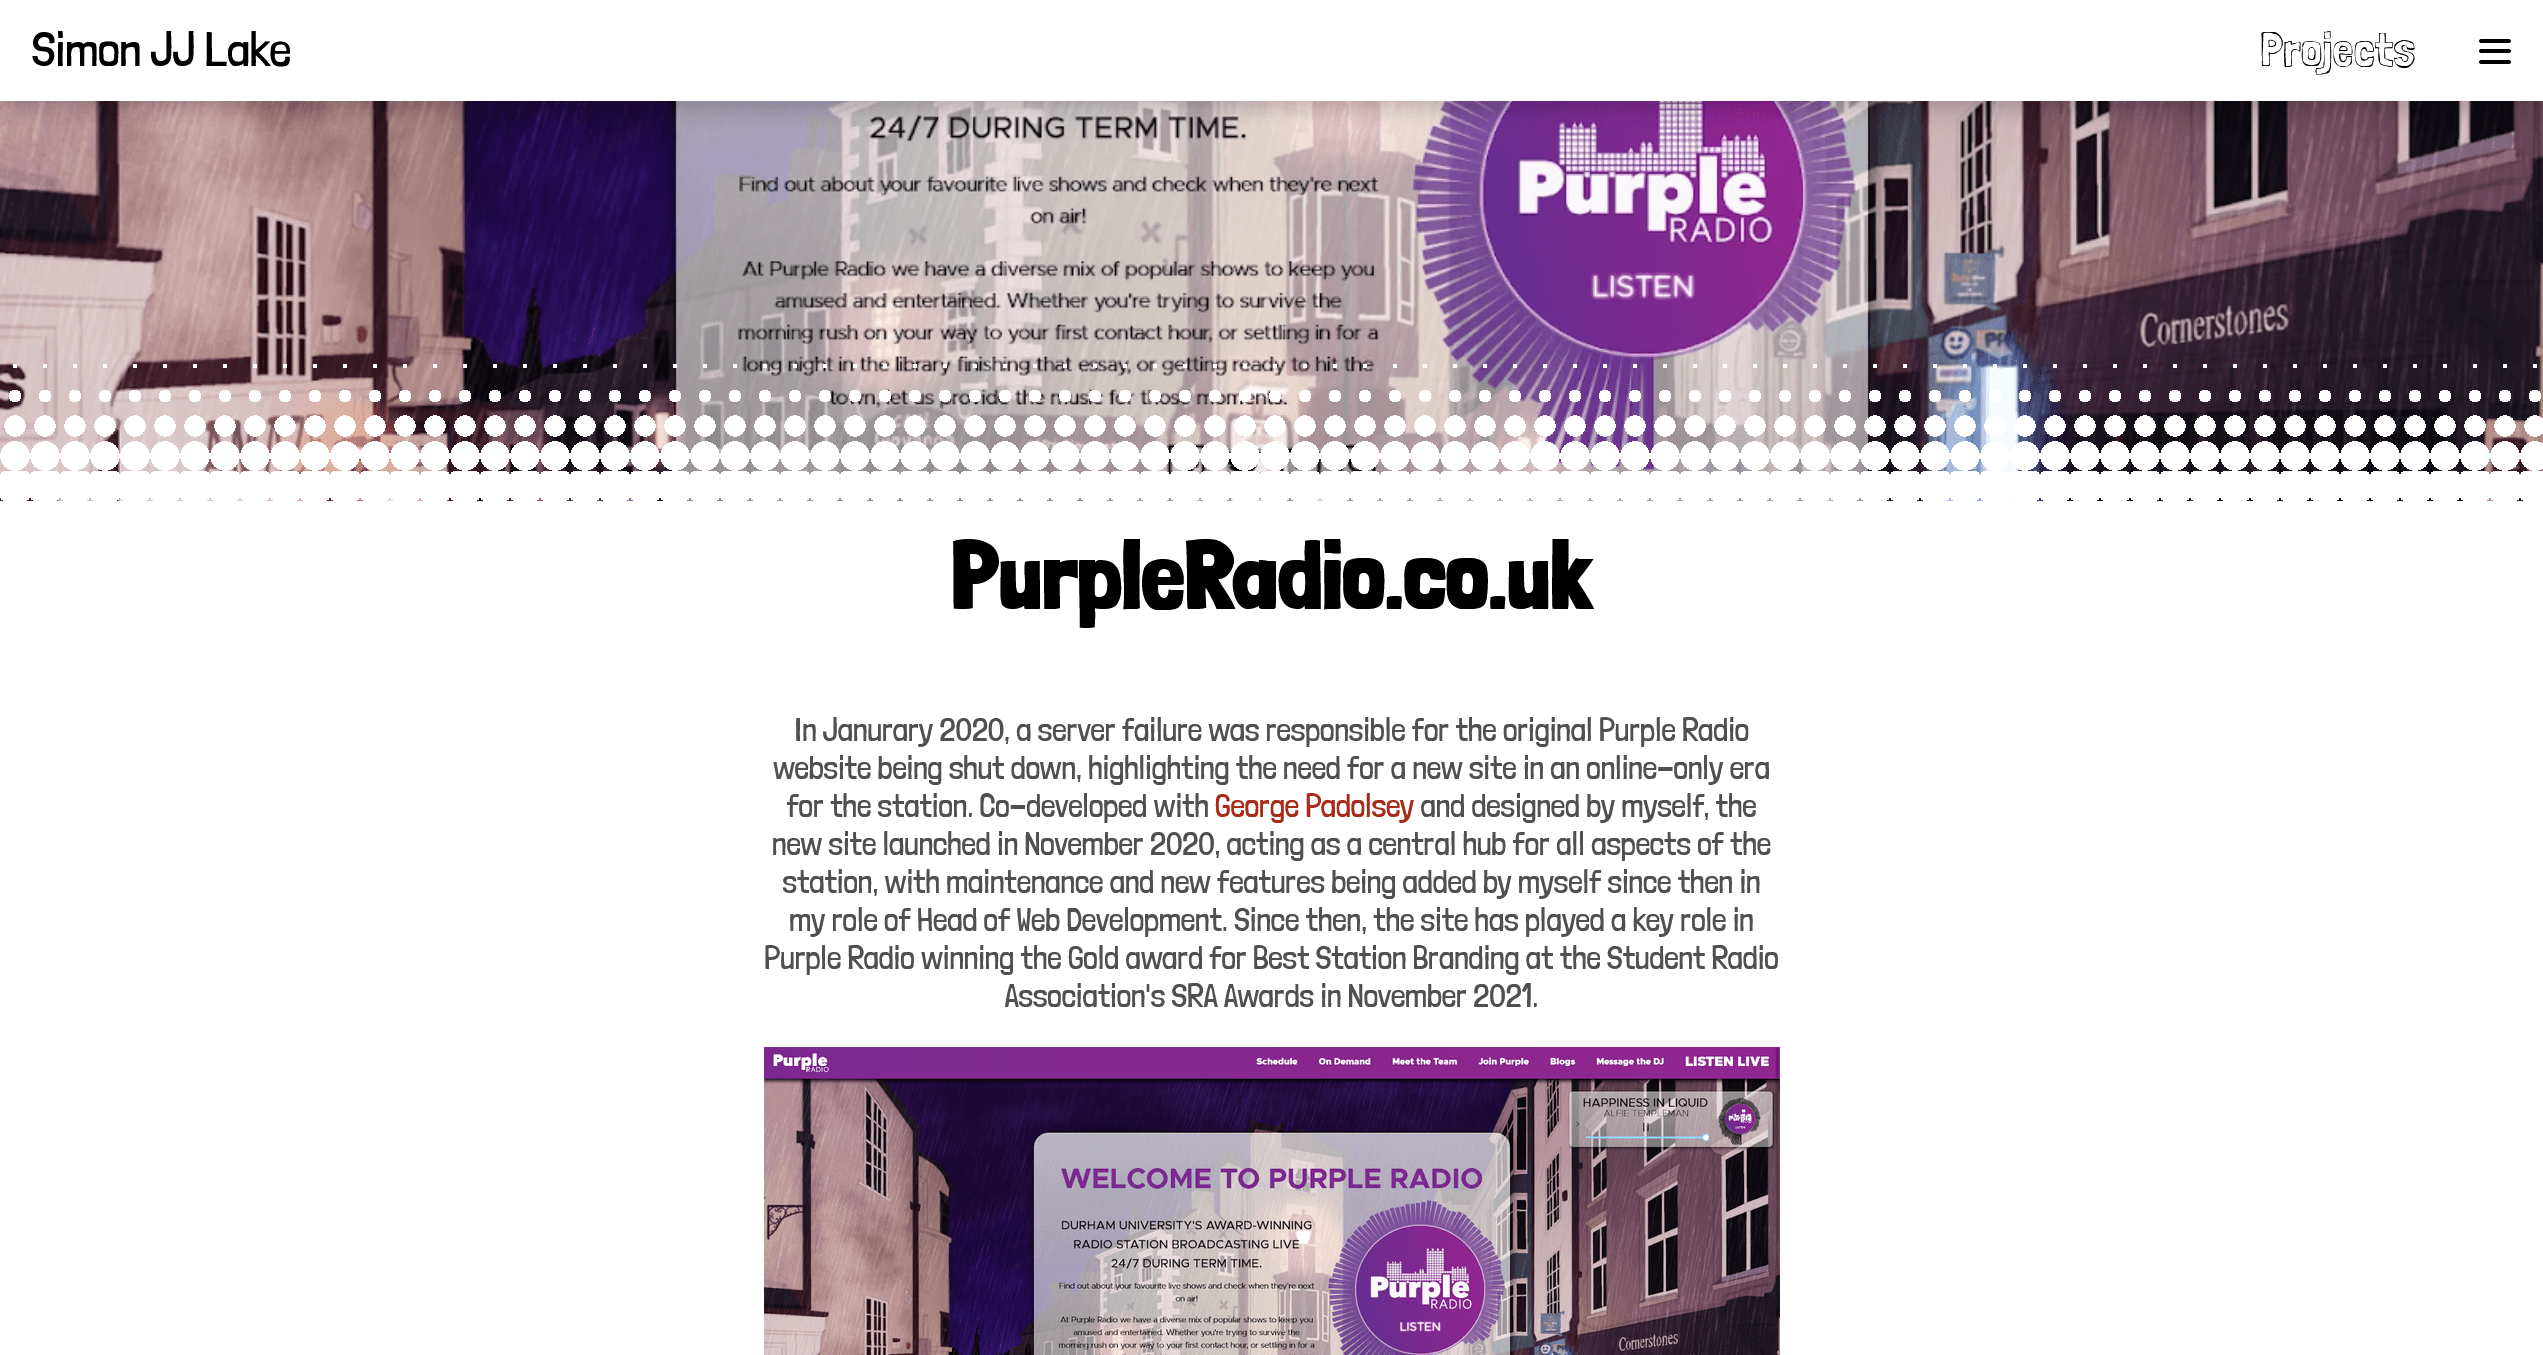 Screenshot_2022_02_10_at_15_23_50_Purple_Radio_co_uk_Simon_JJ_Lake_4acc933226.png